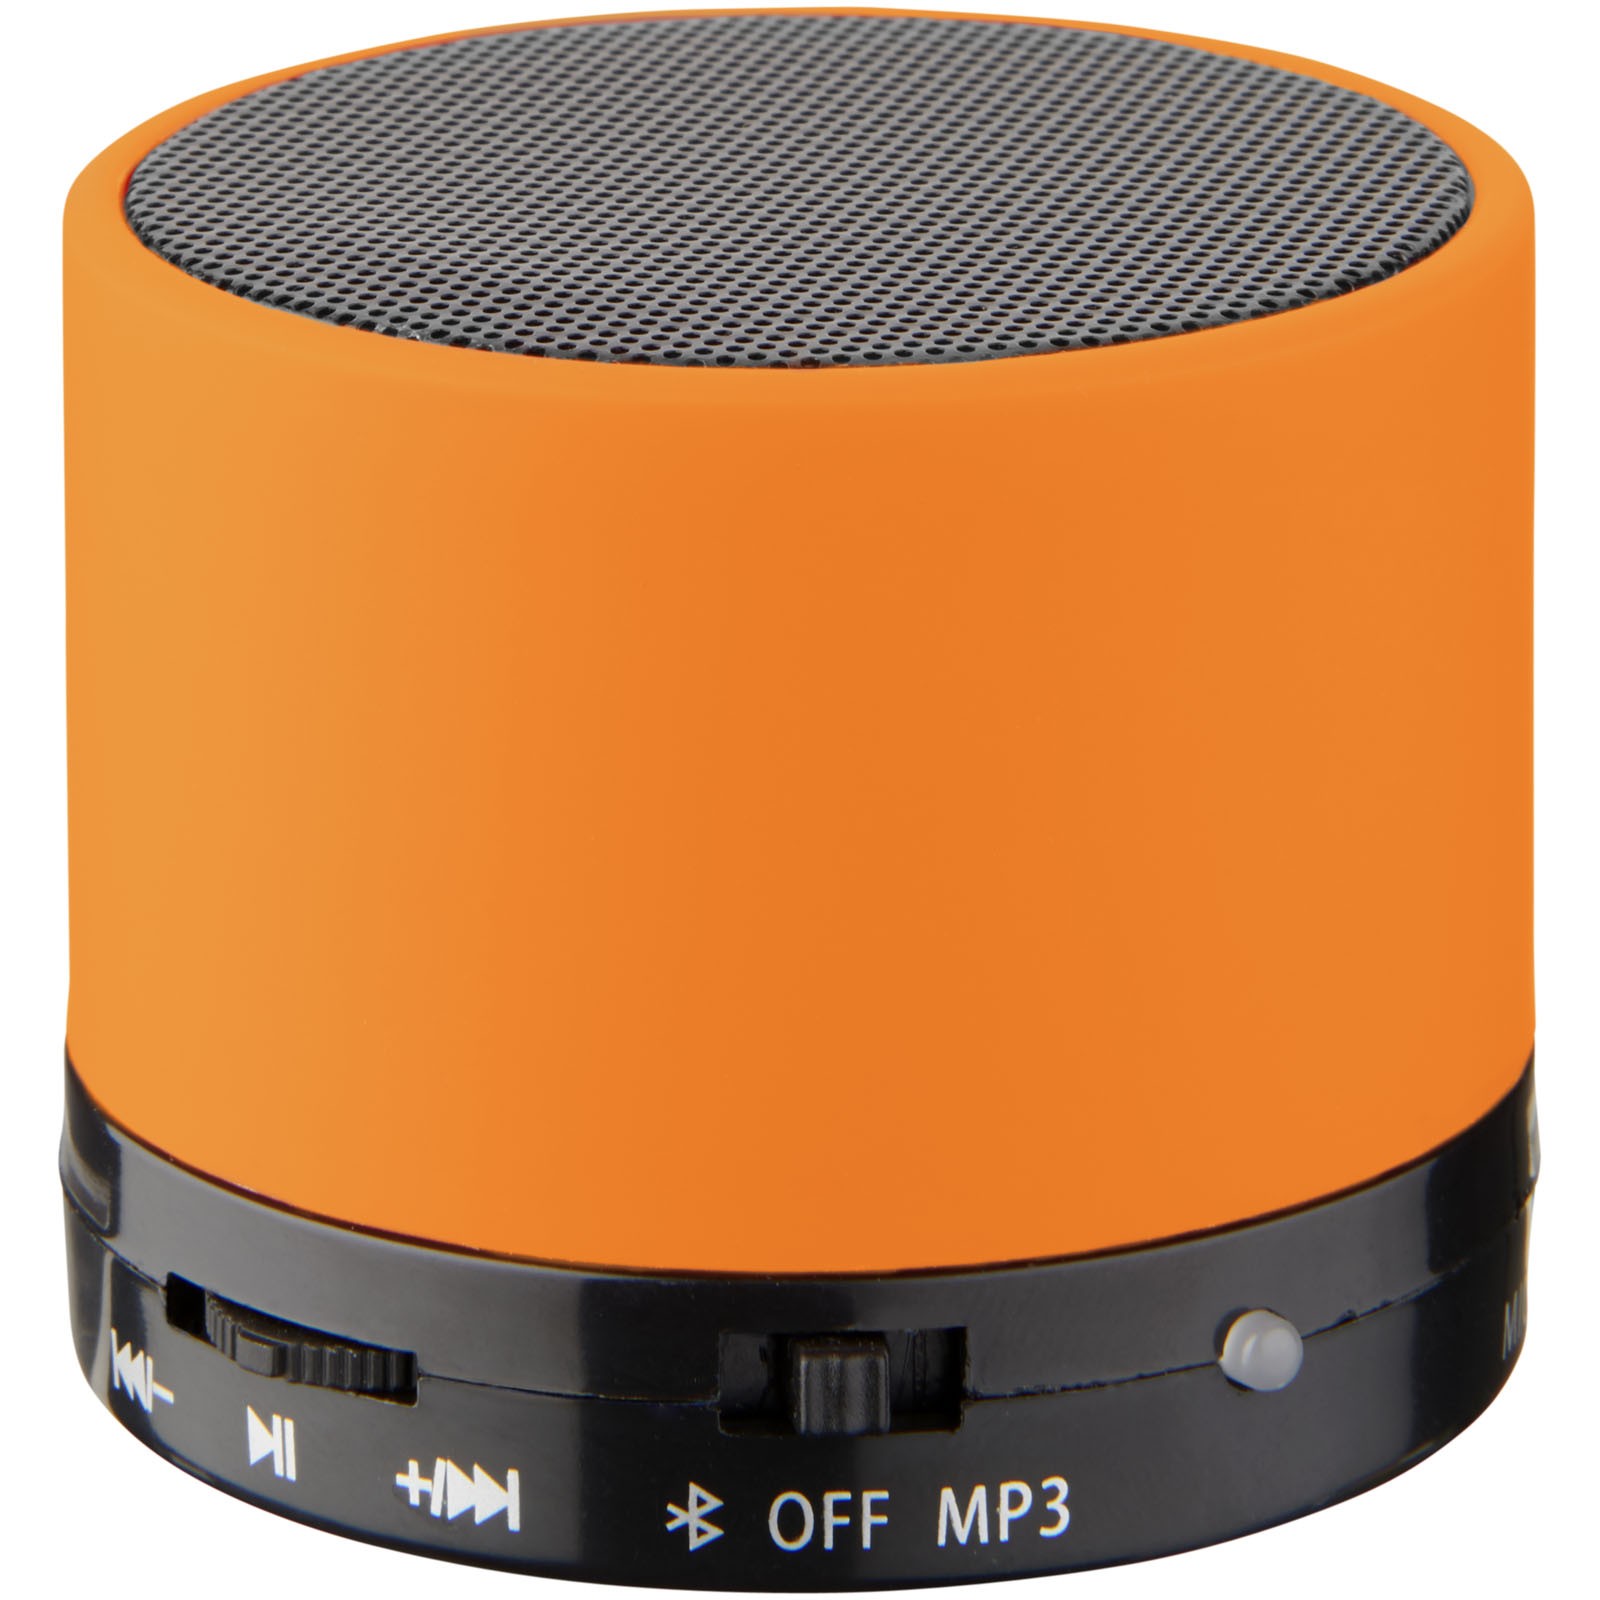 Duck cylinder Bluetooth® speaker with rubber finish - Orange